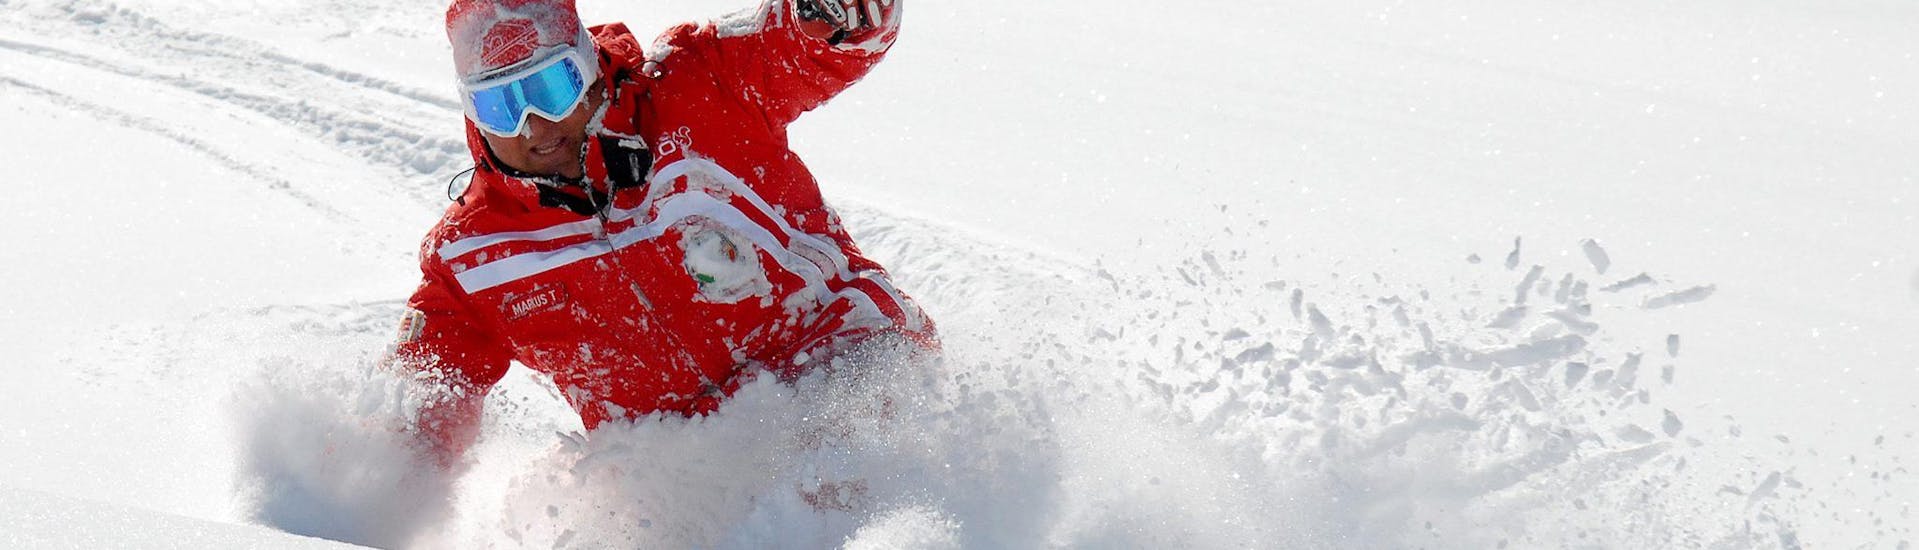 Een ervaren klant tijdens de privé off-piste skiles met Scuola di Sci Alpe di Siusi.